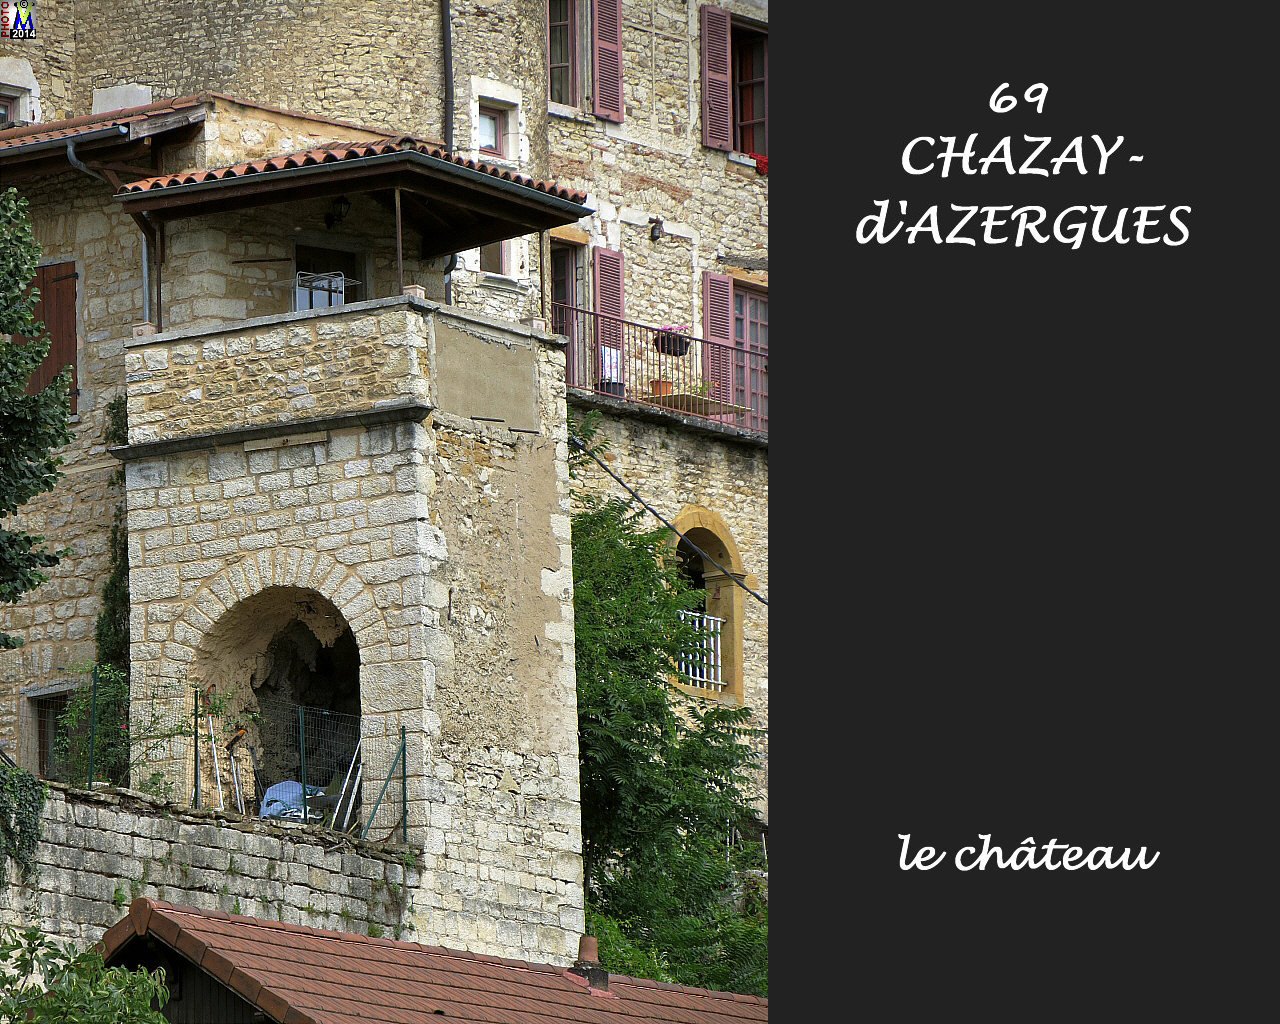 69CHAZAY-AZERGUES_chateau_118.jpg